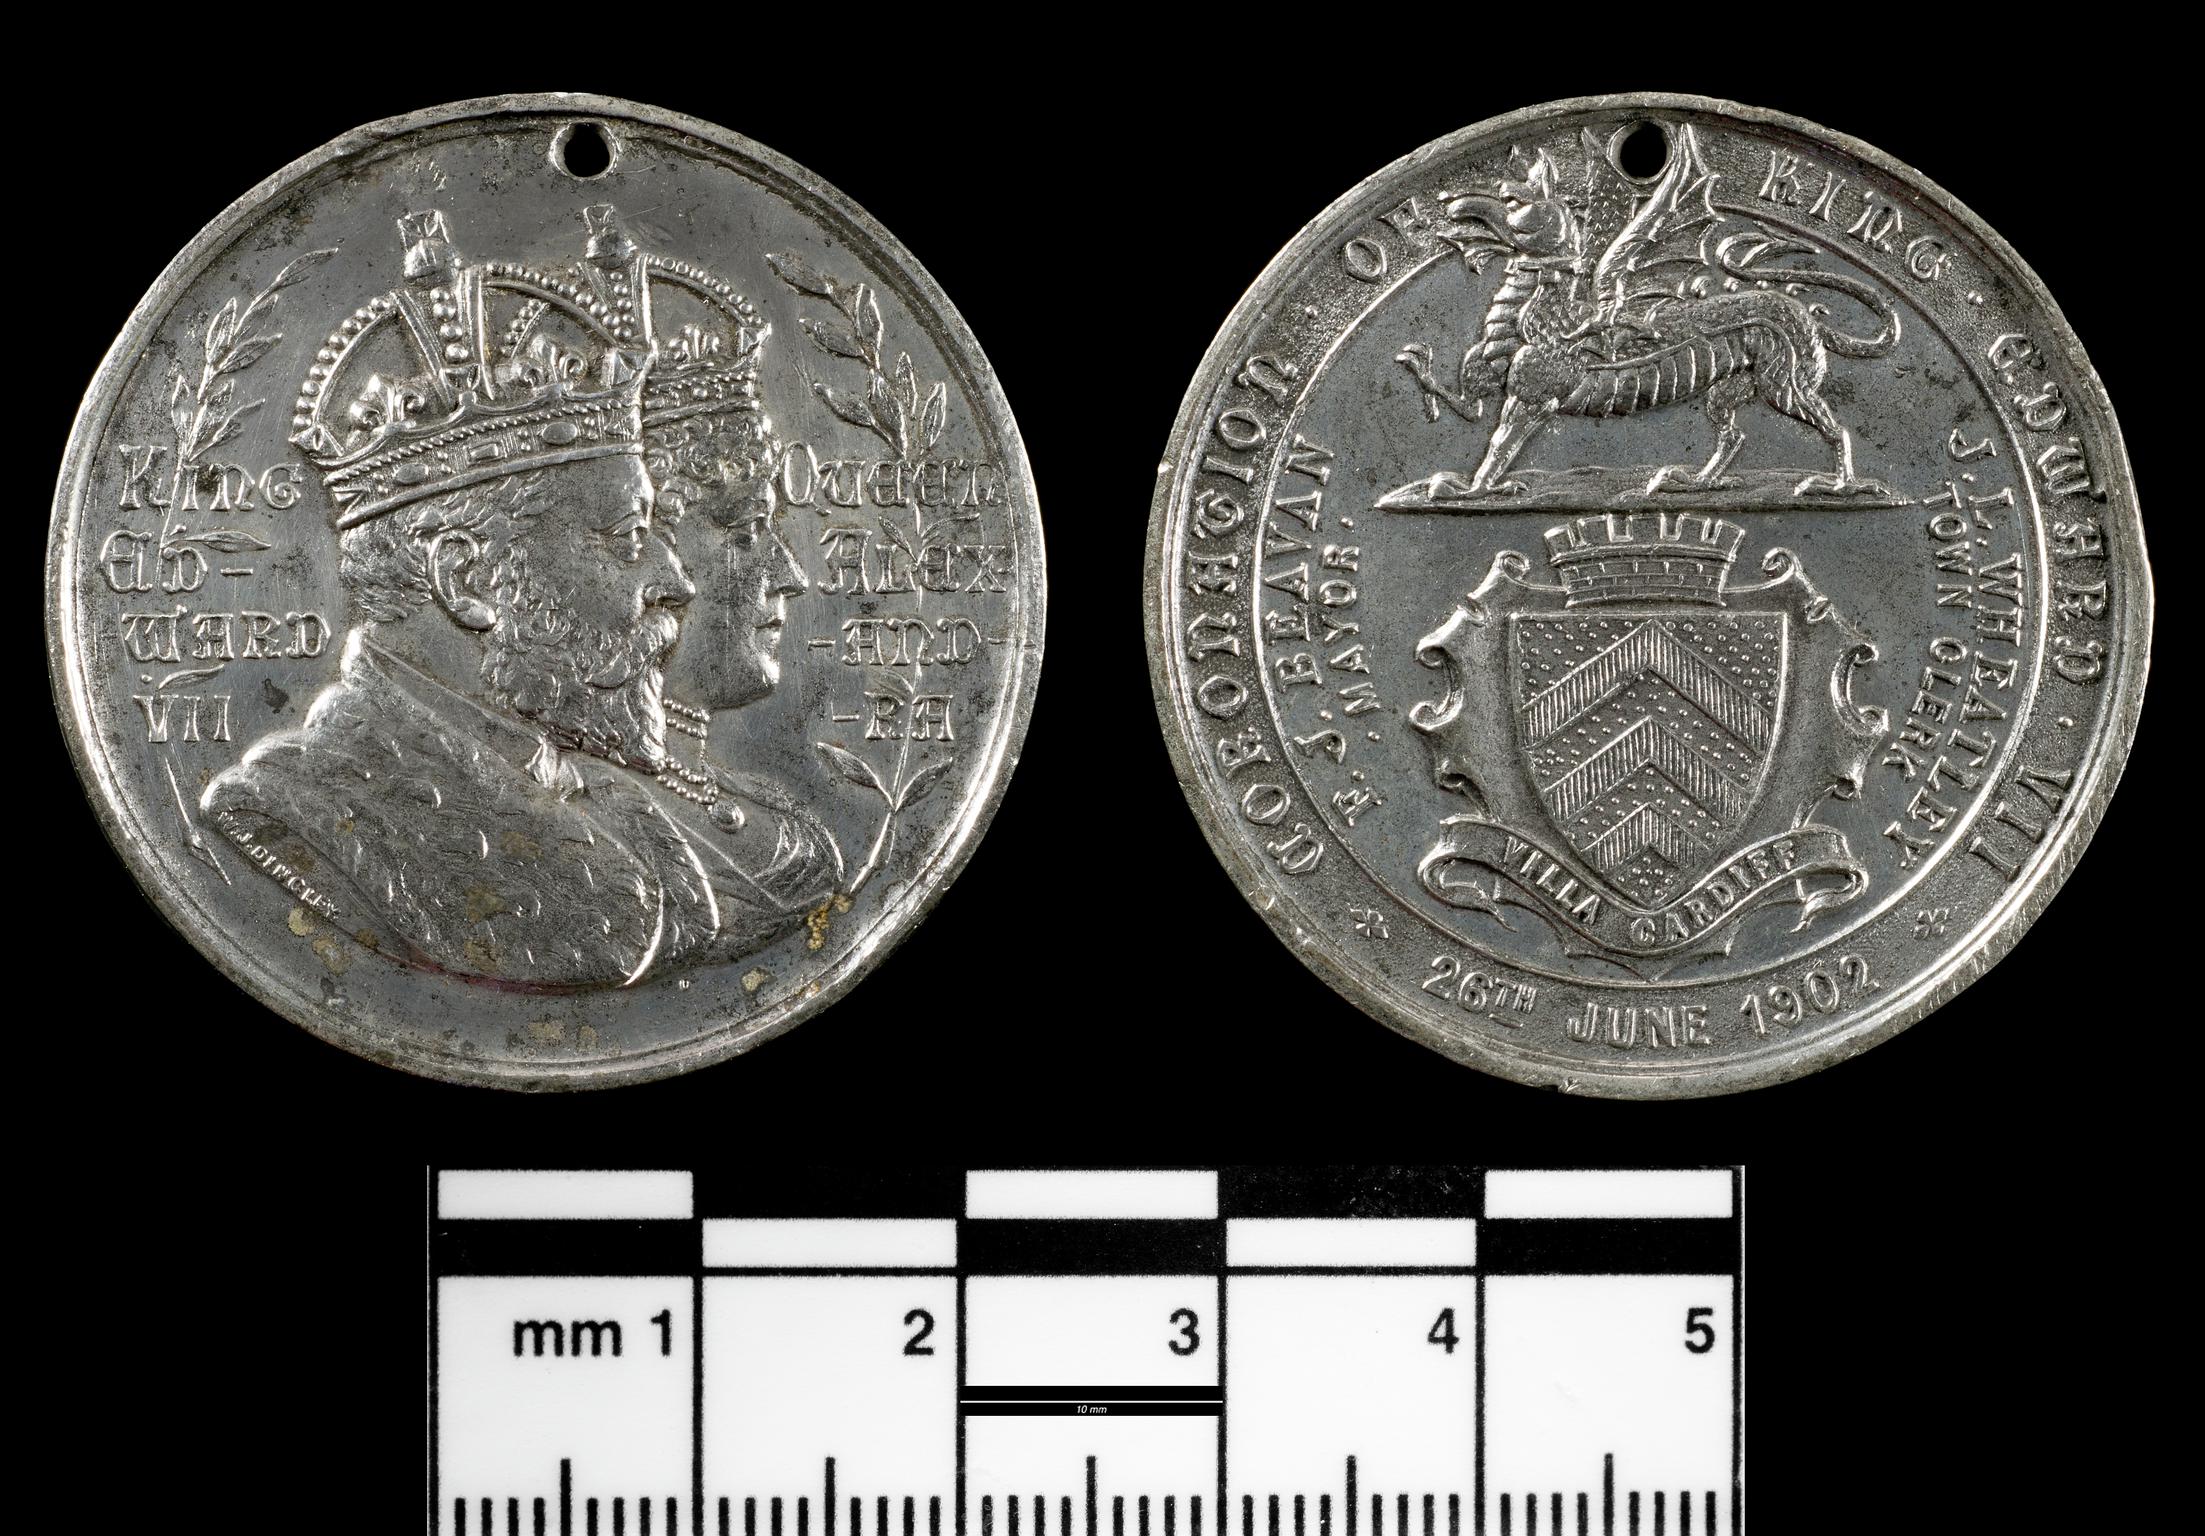 Coronation of King Edward VII 26 June 1902, medal